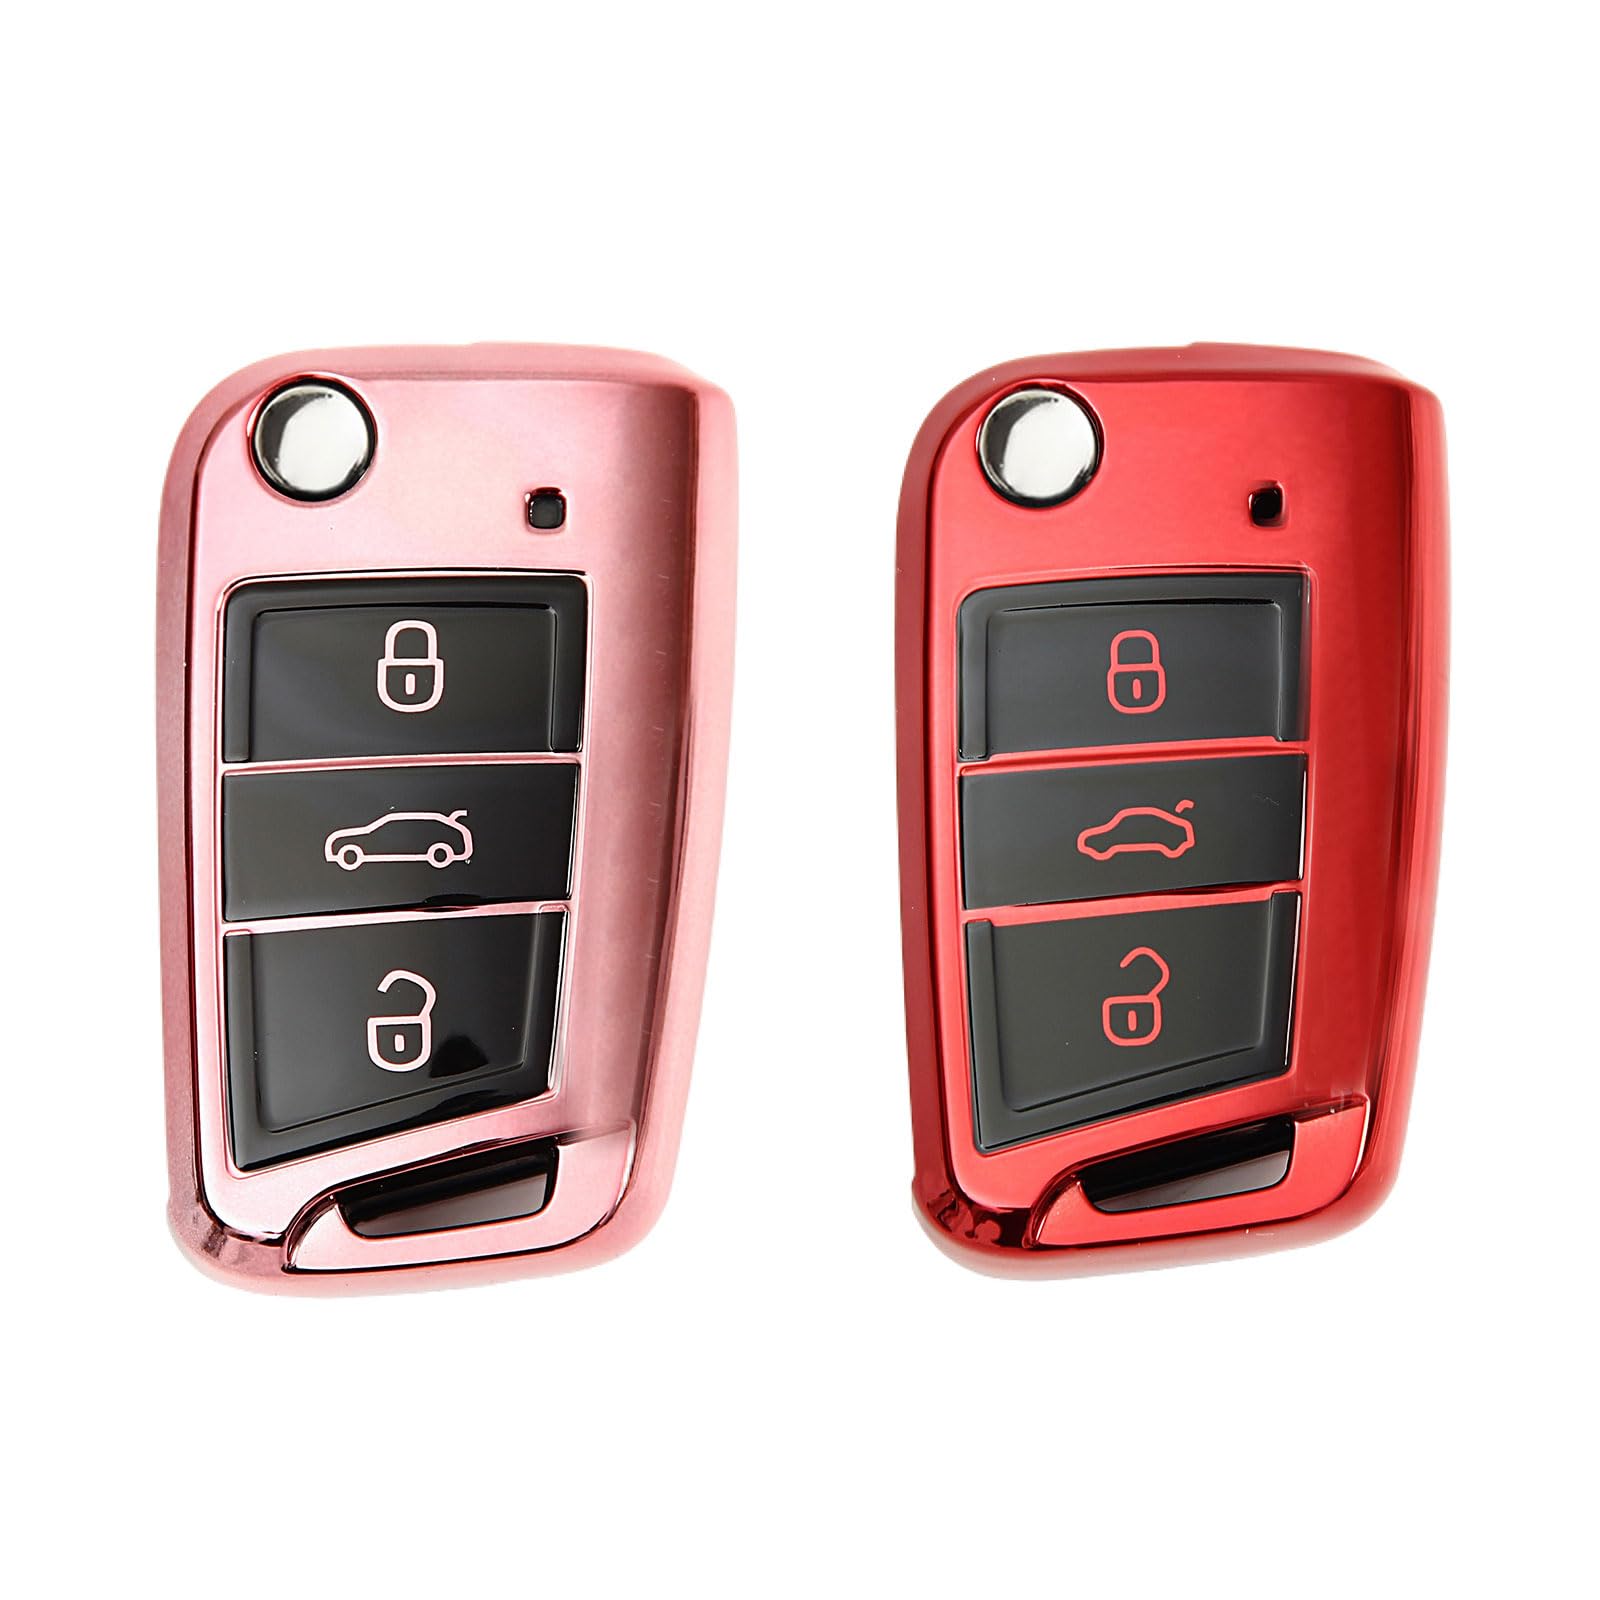 2 Stück Autoschlüssel Hülle, Schlüsselbox,Autoschlüssel Schutzhülle kompatibel mit VW Golf 7、Polo、Tiguan、Skoda 3-Tasten Schlüsselhülle (Roségold + Rot) von Mythosurge